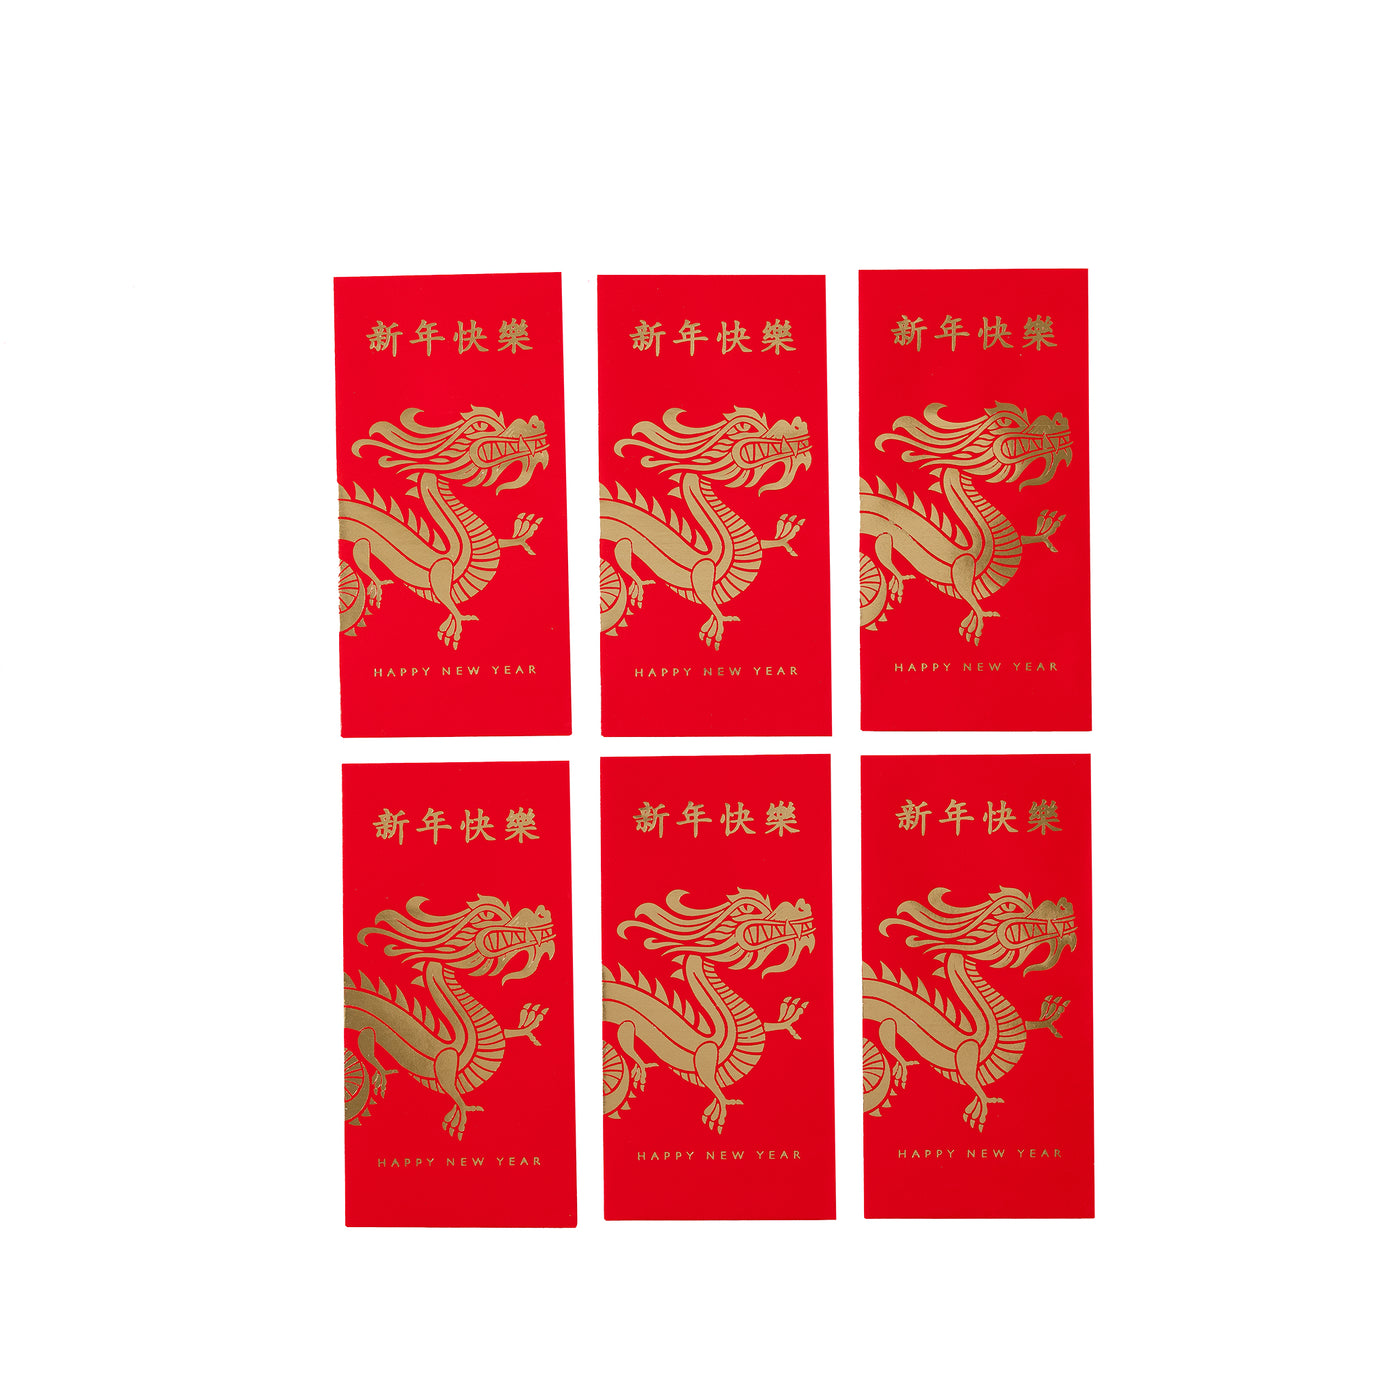 PLNY114 - Lunar New Year Dragon Red Envelopes